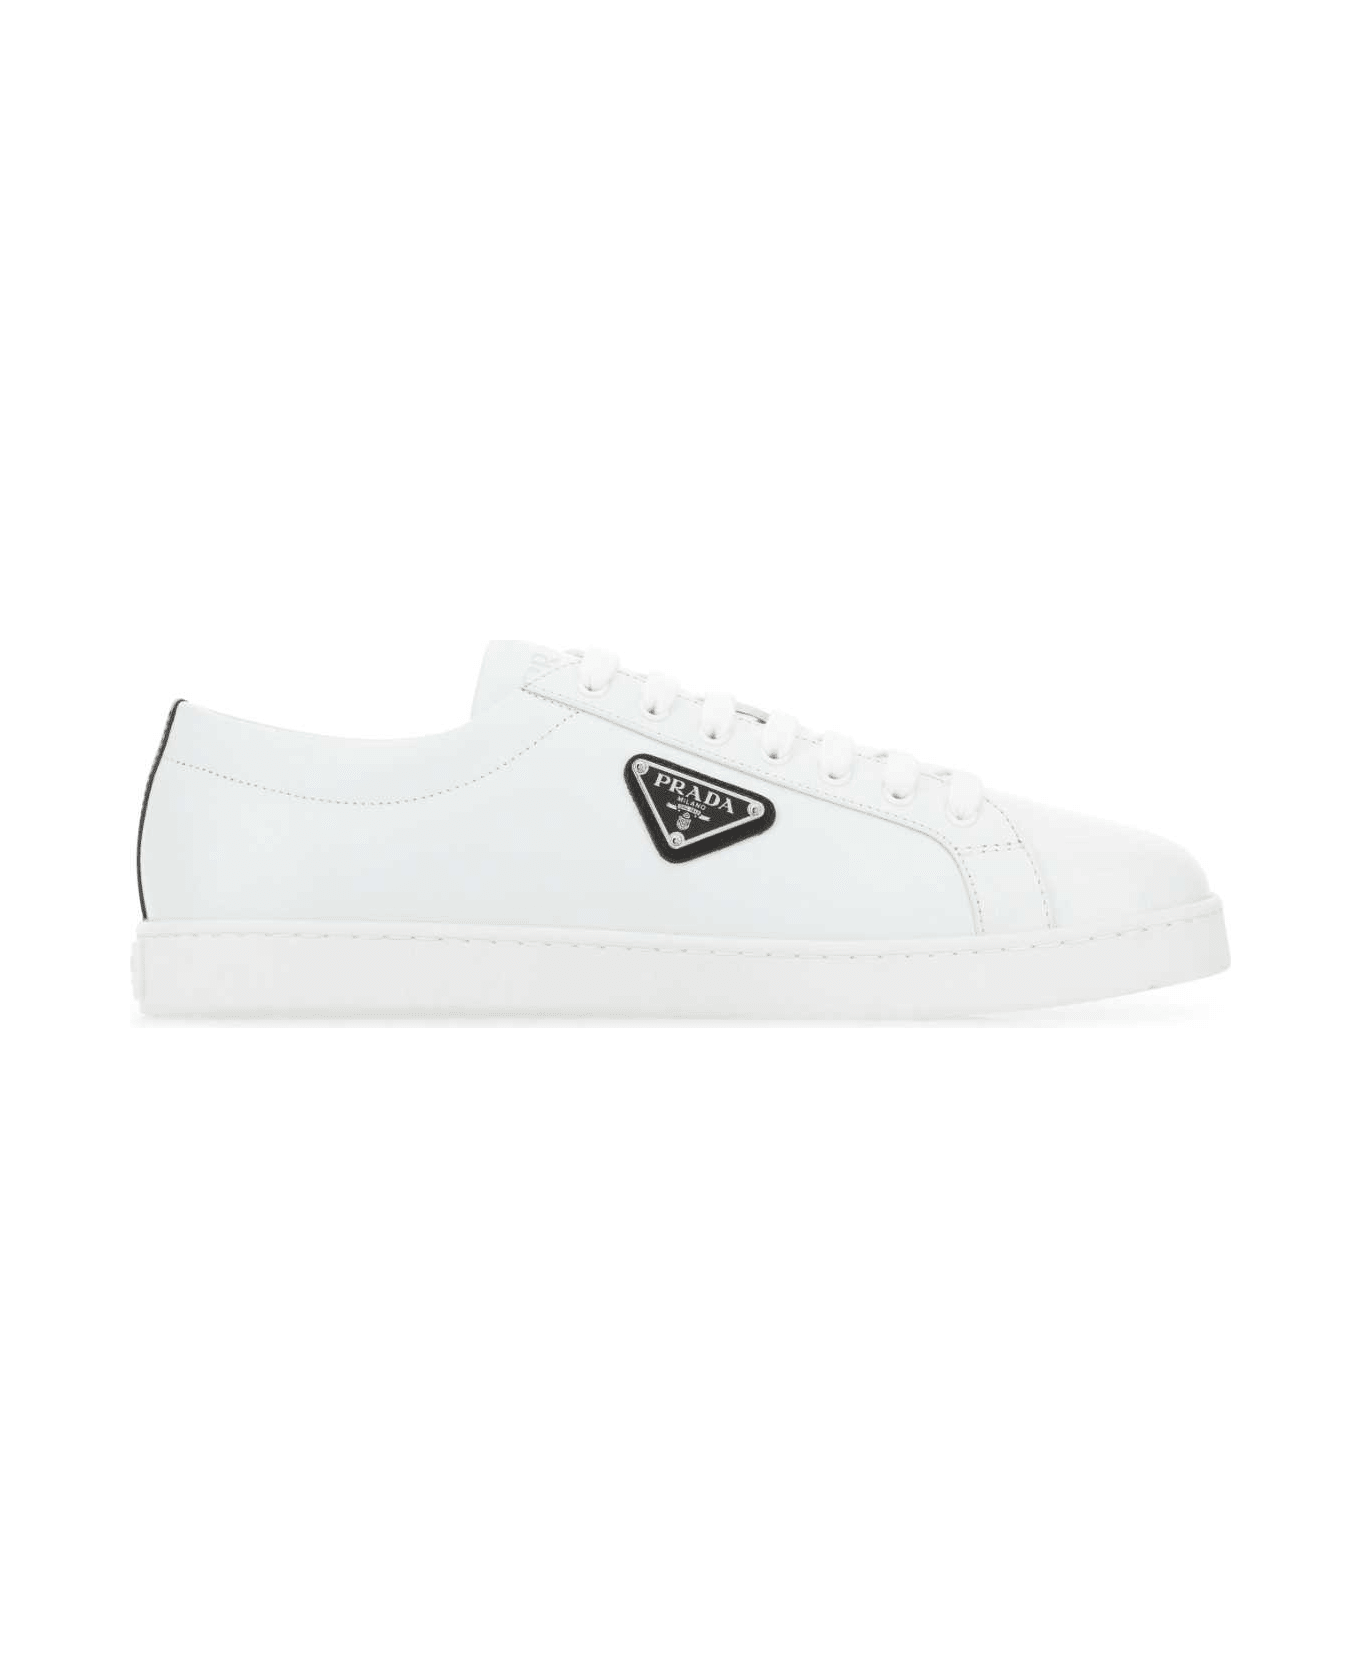 Prada White Leather Sneakers - Multicolor スニーカー